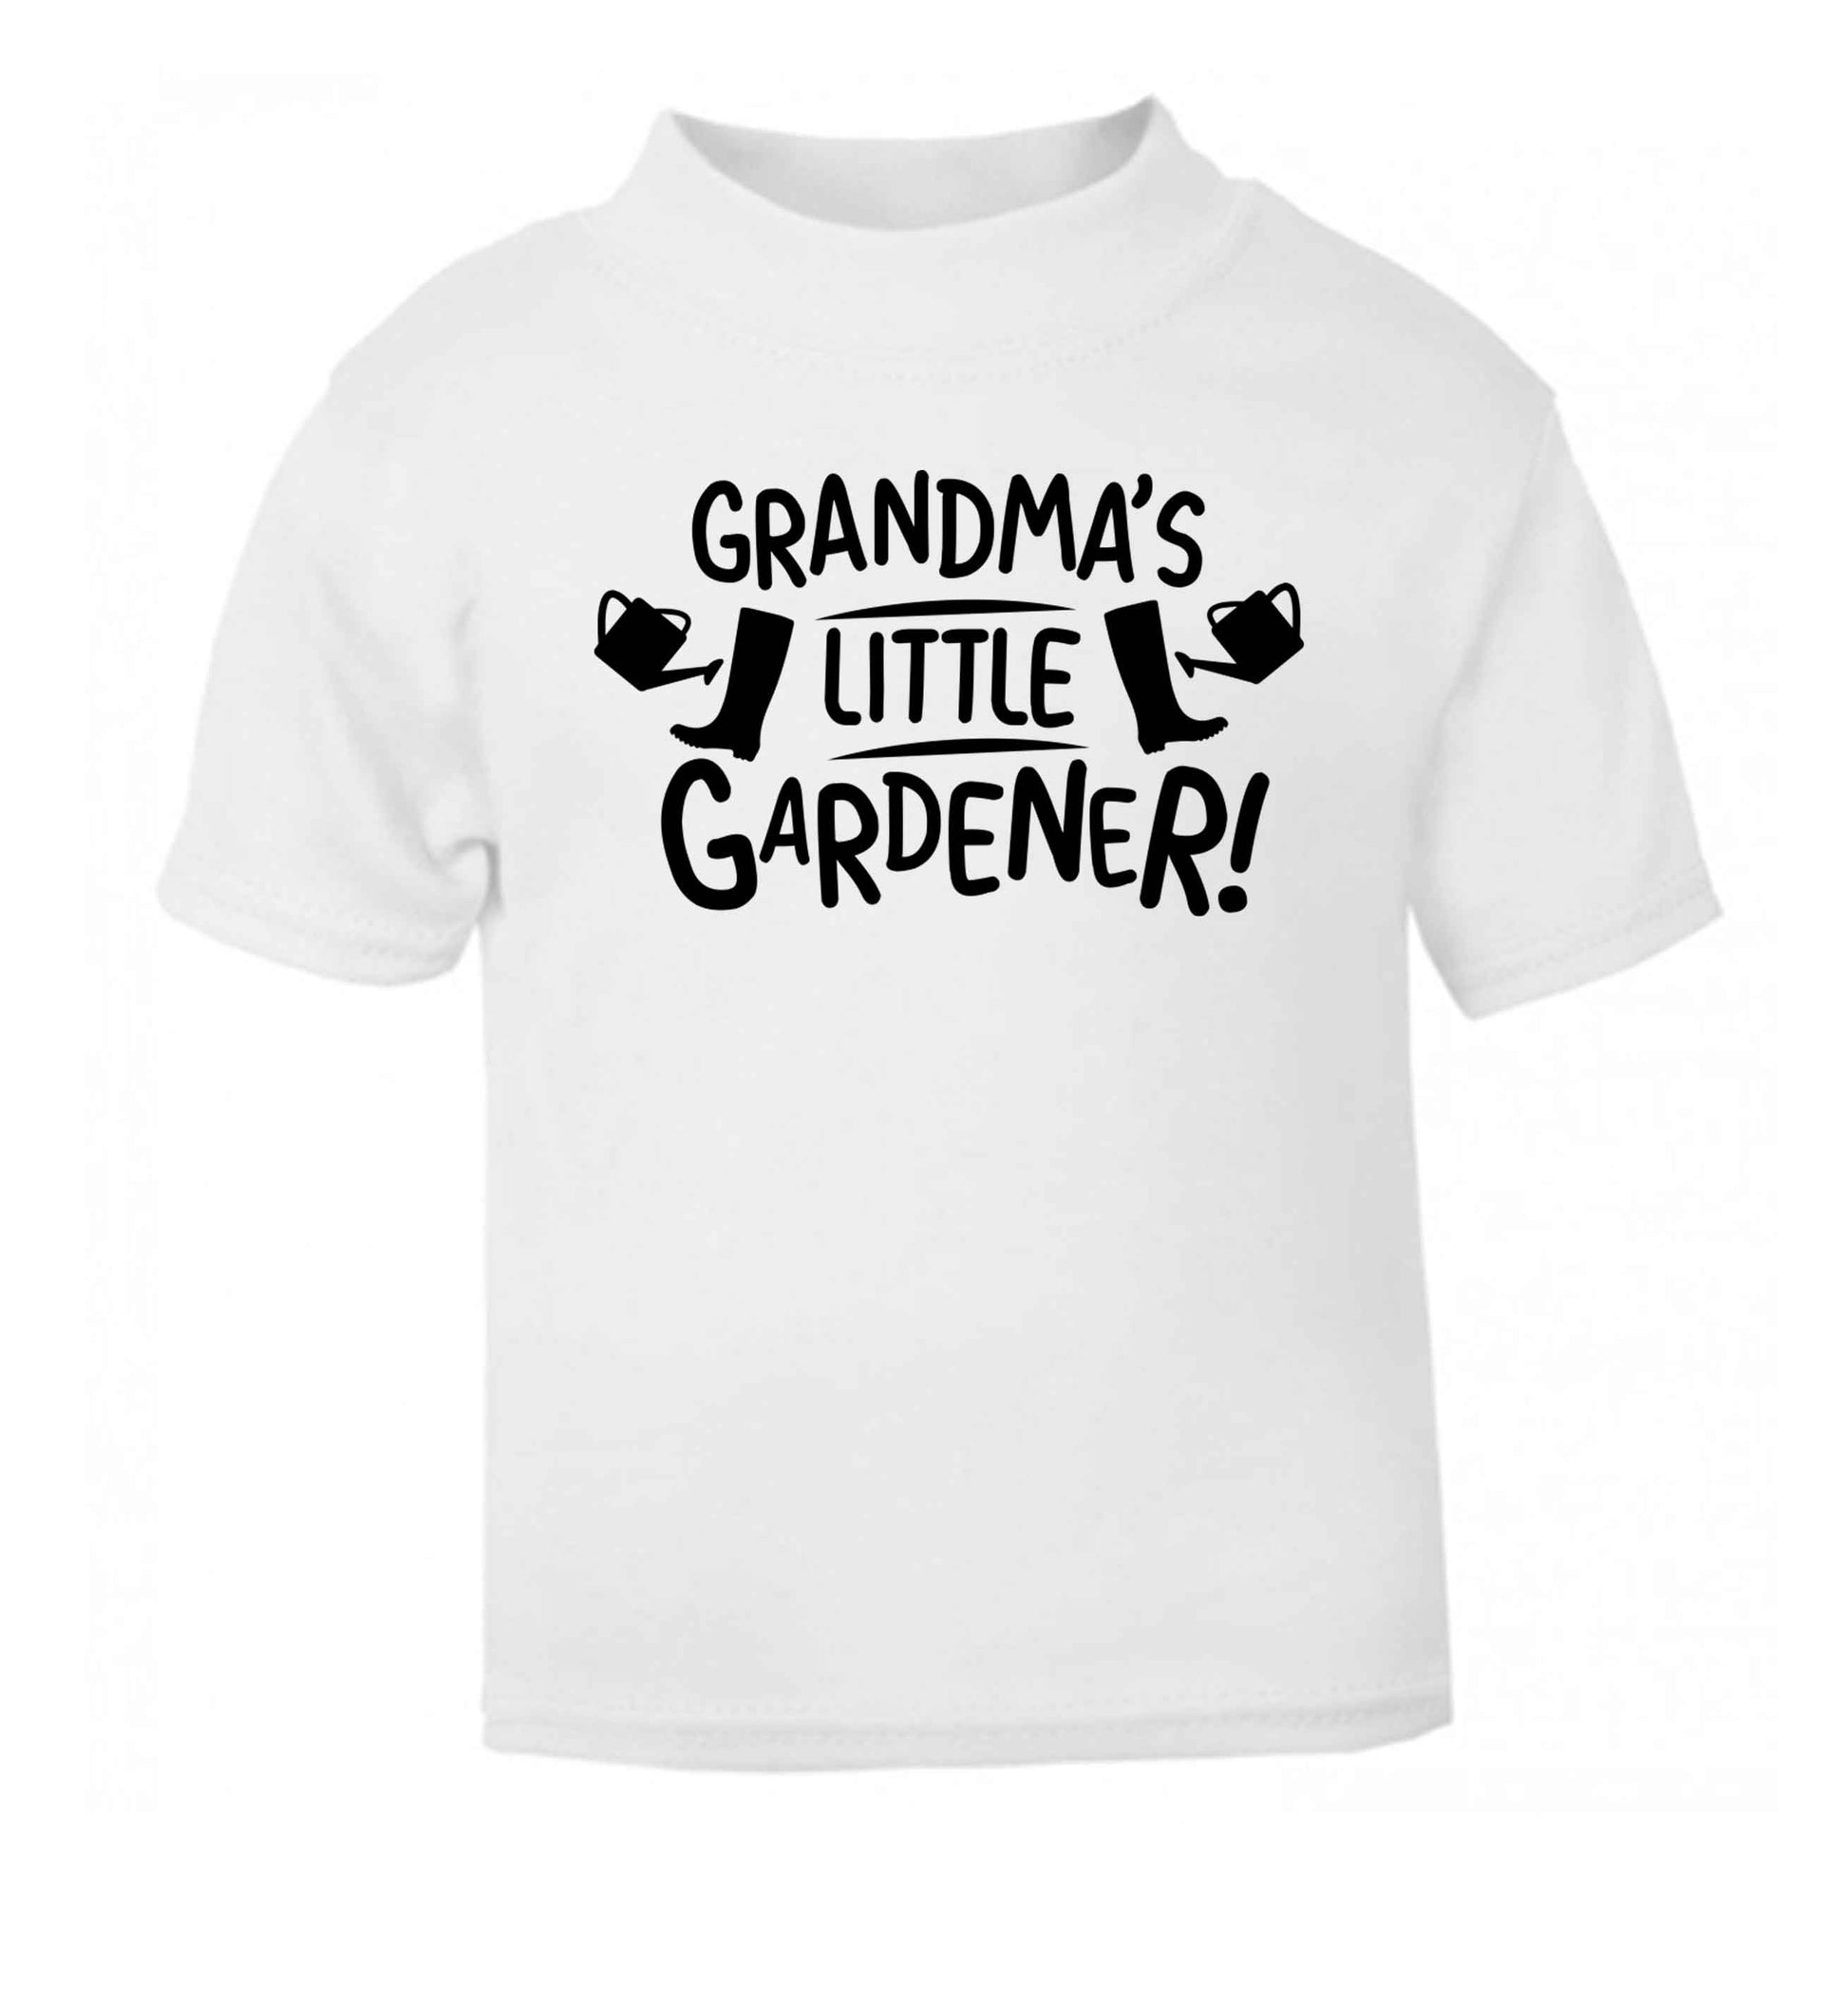 Grandma's little gardener white Baby Toddler Tshirt 2 Years